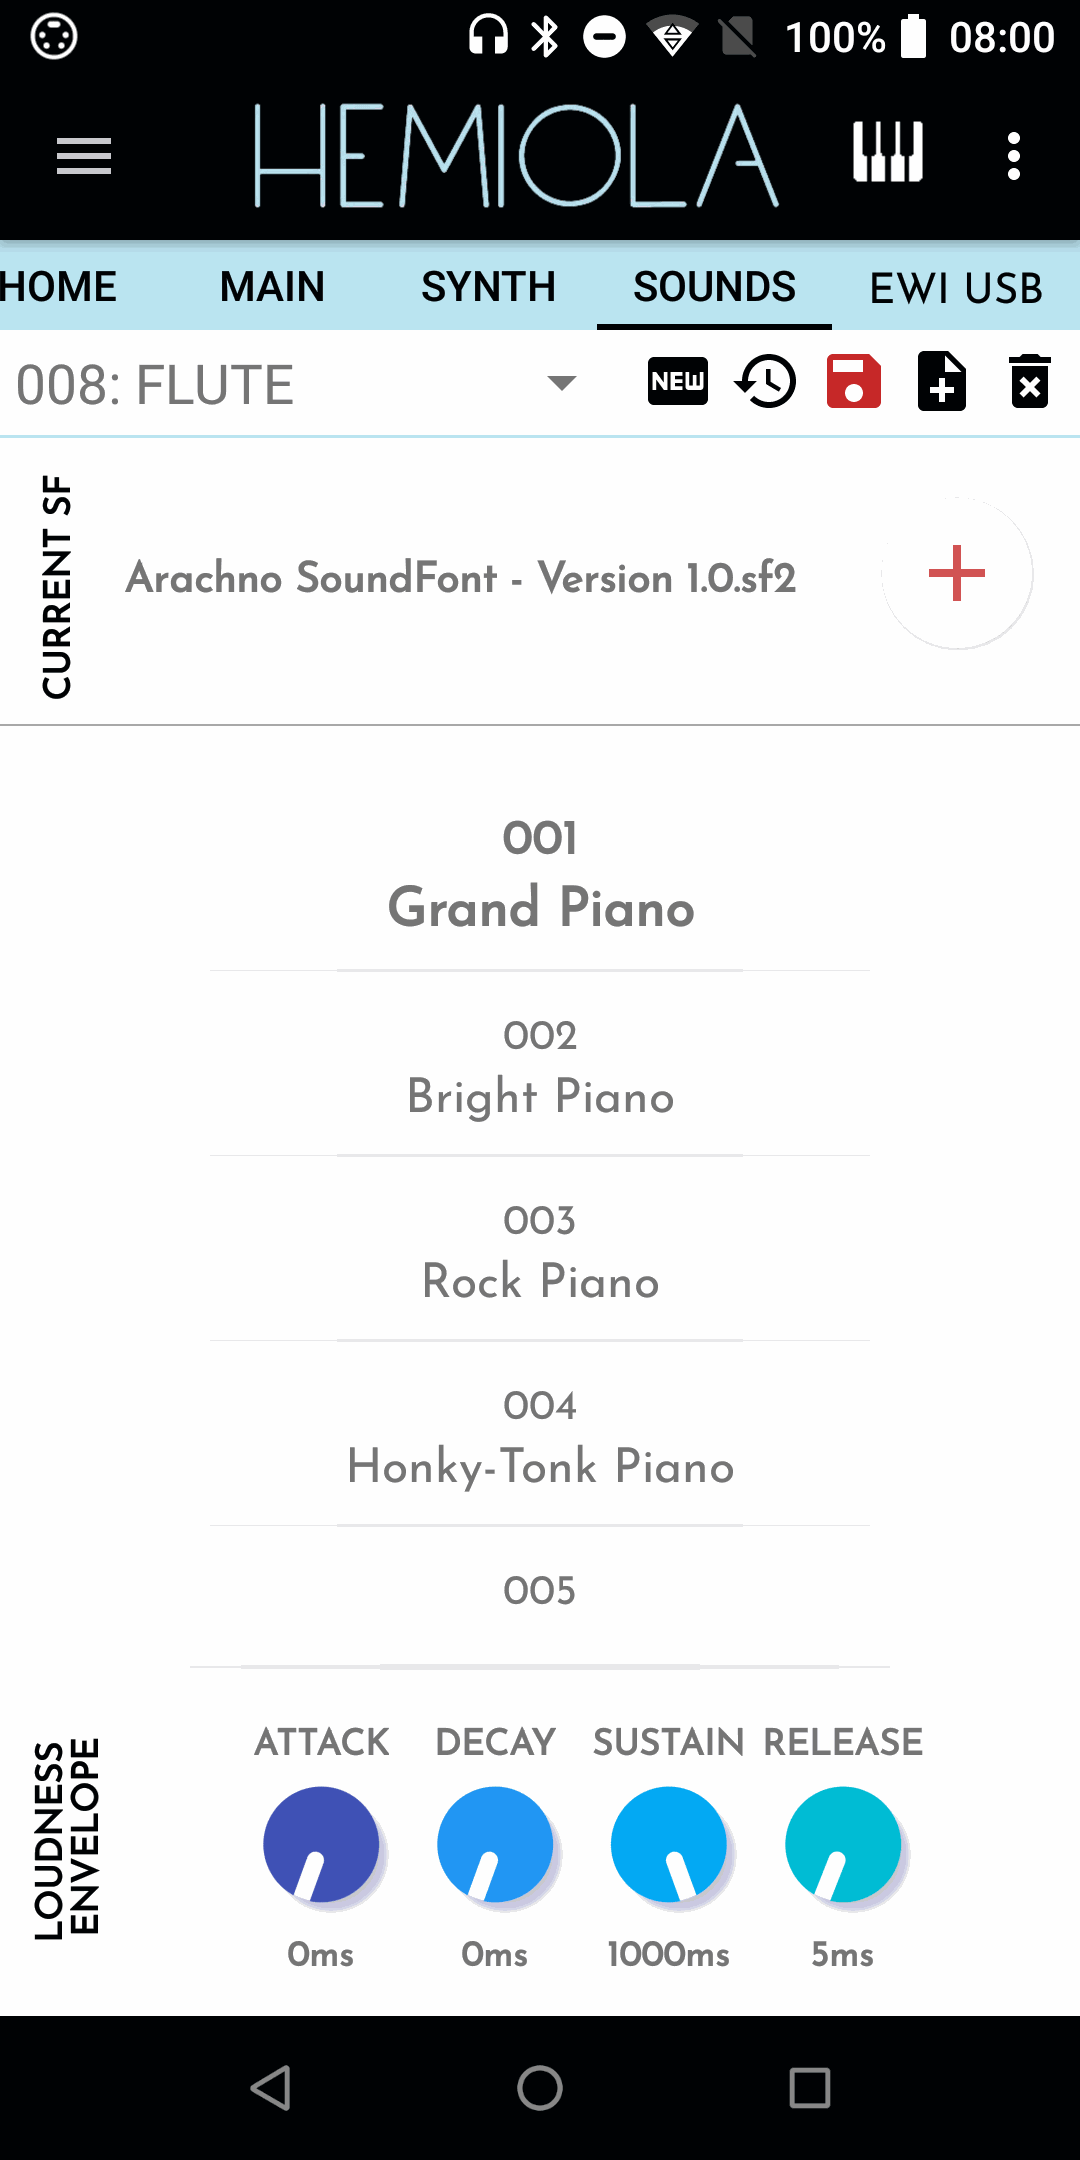 Gianluca Barbaro's Roland Mini Blog - Hemiola Android app - SoundFonts